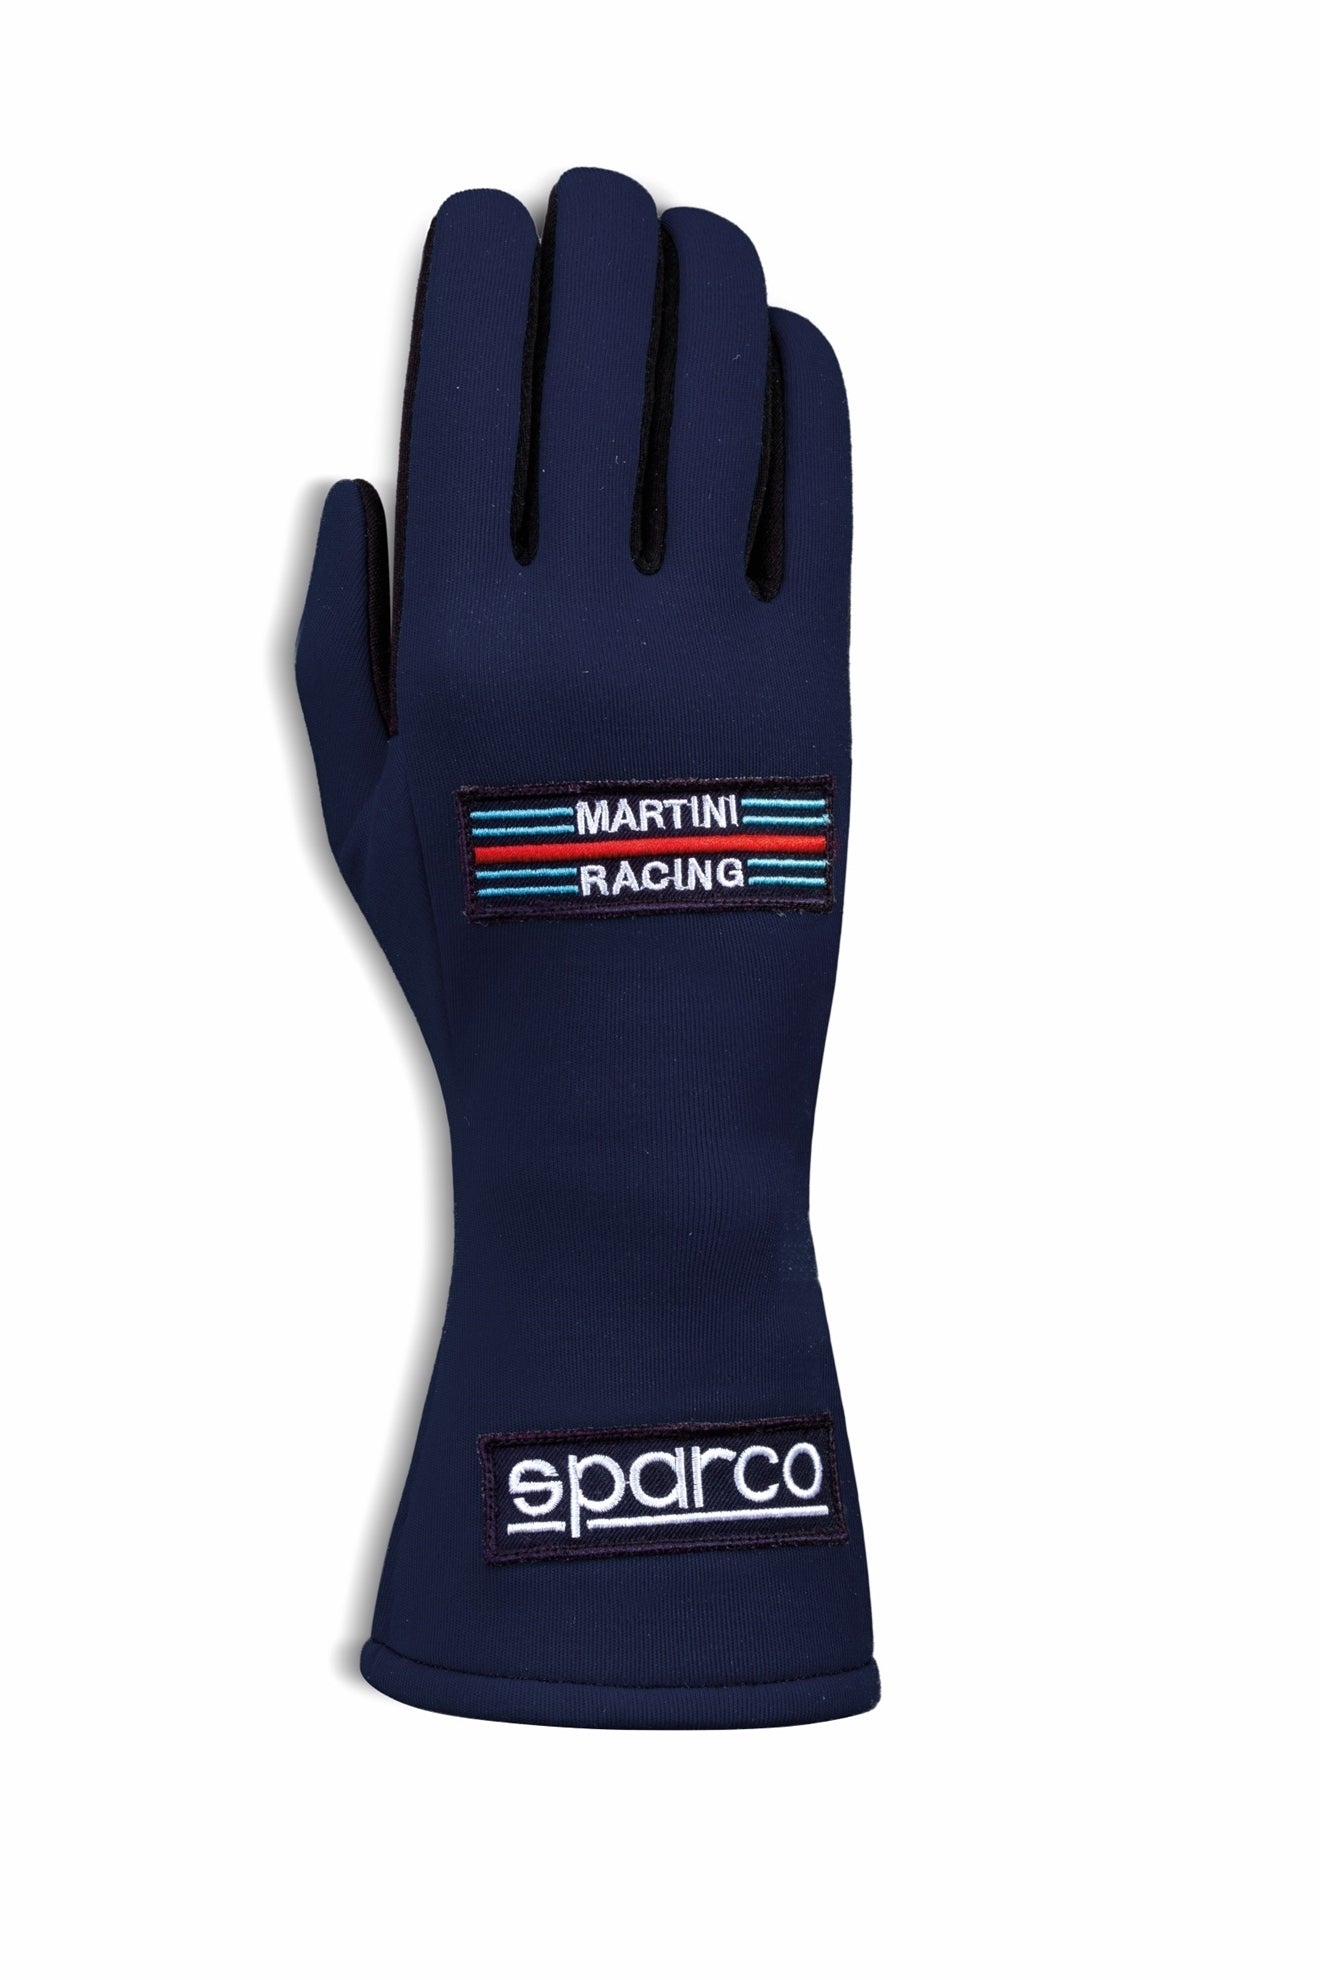 Sparco Martini Racing Land Racing Gloves